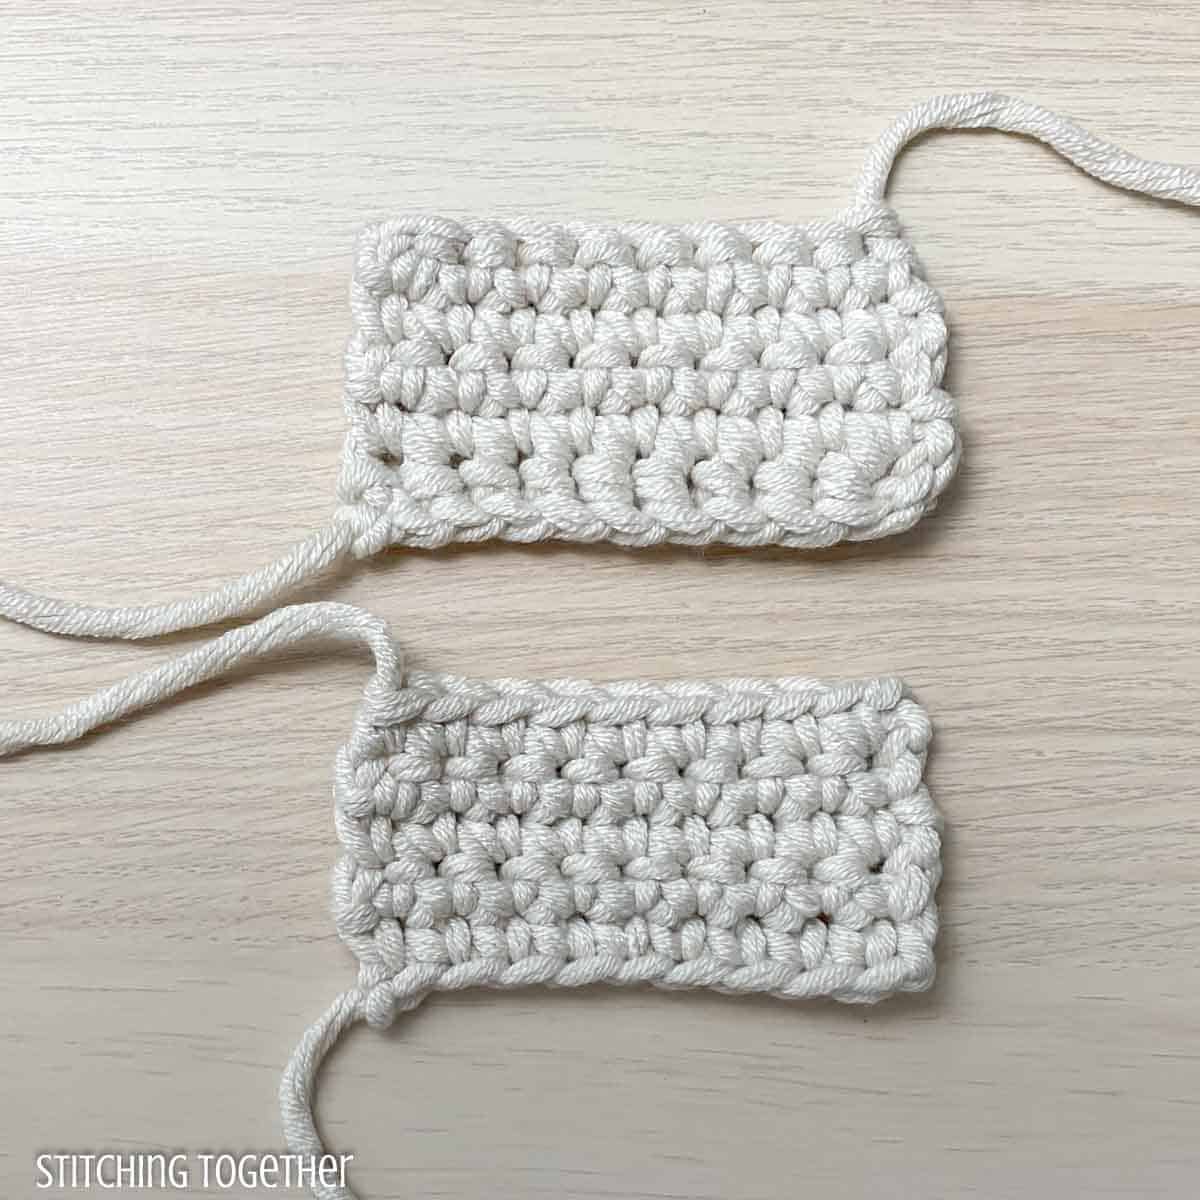 two single crochet swatches in cream yarn